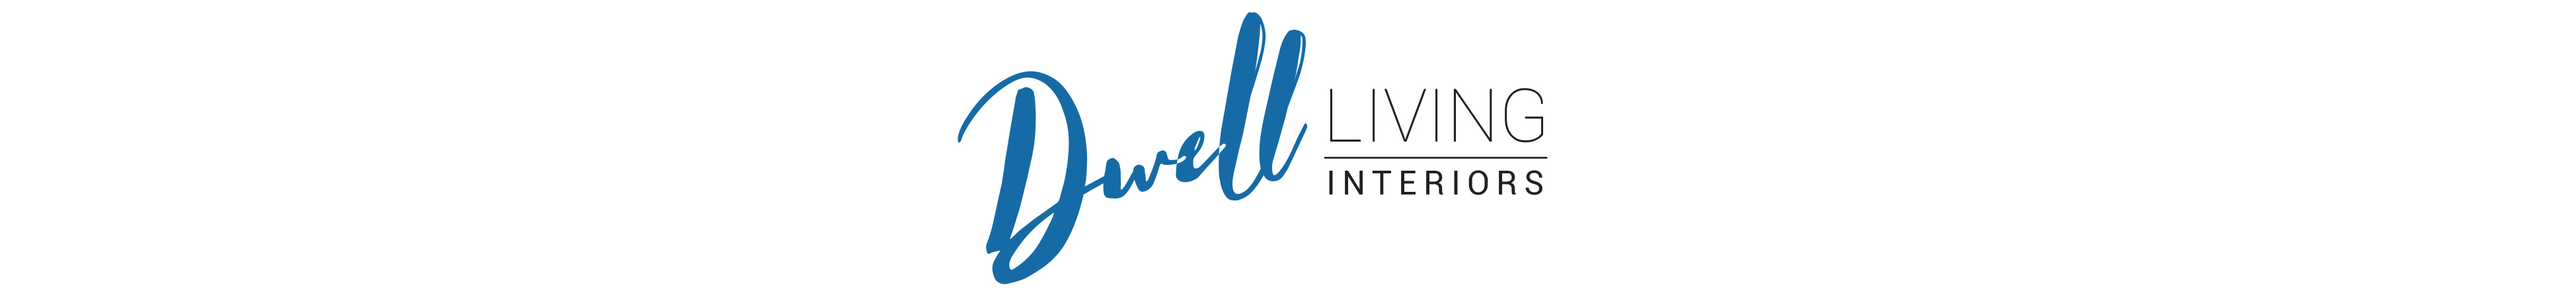 Dwell Living Interiors